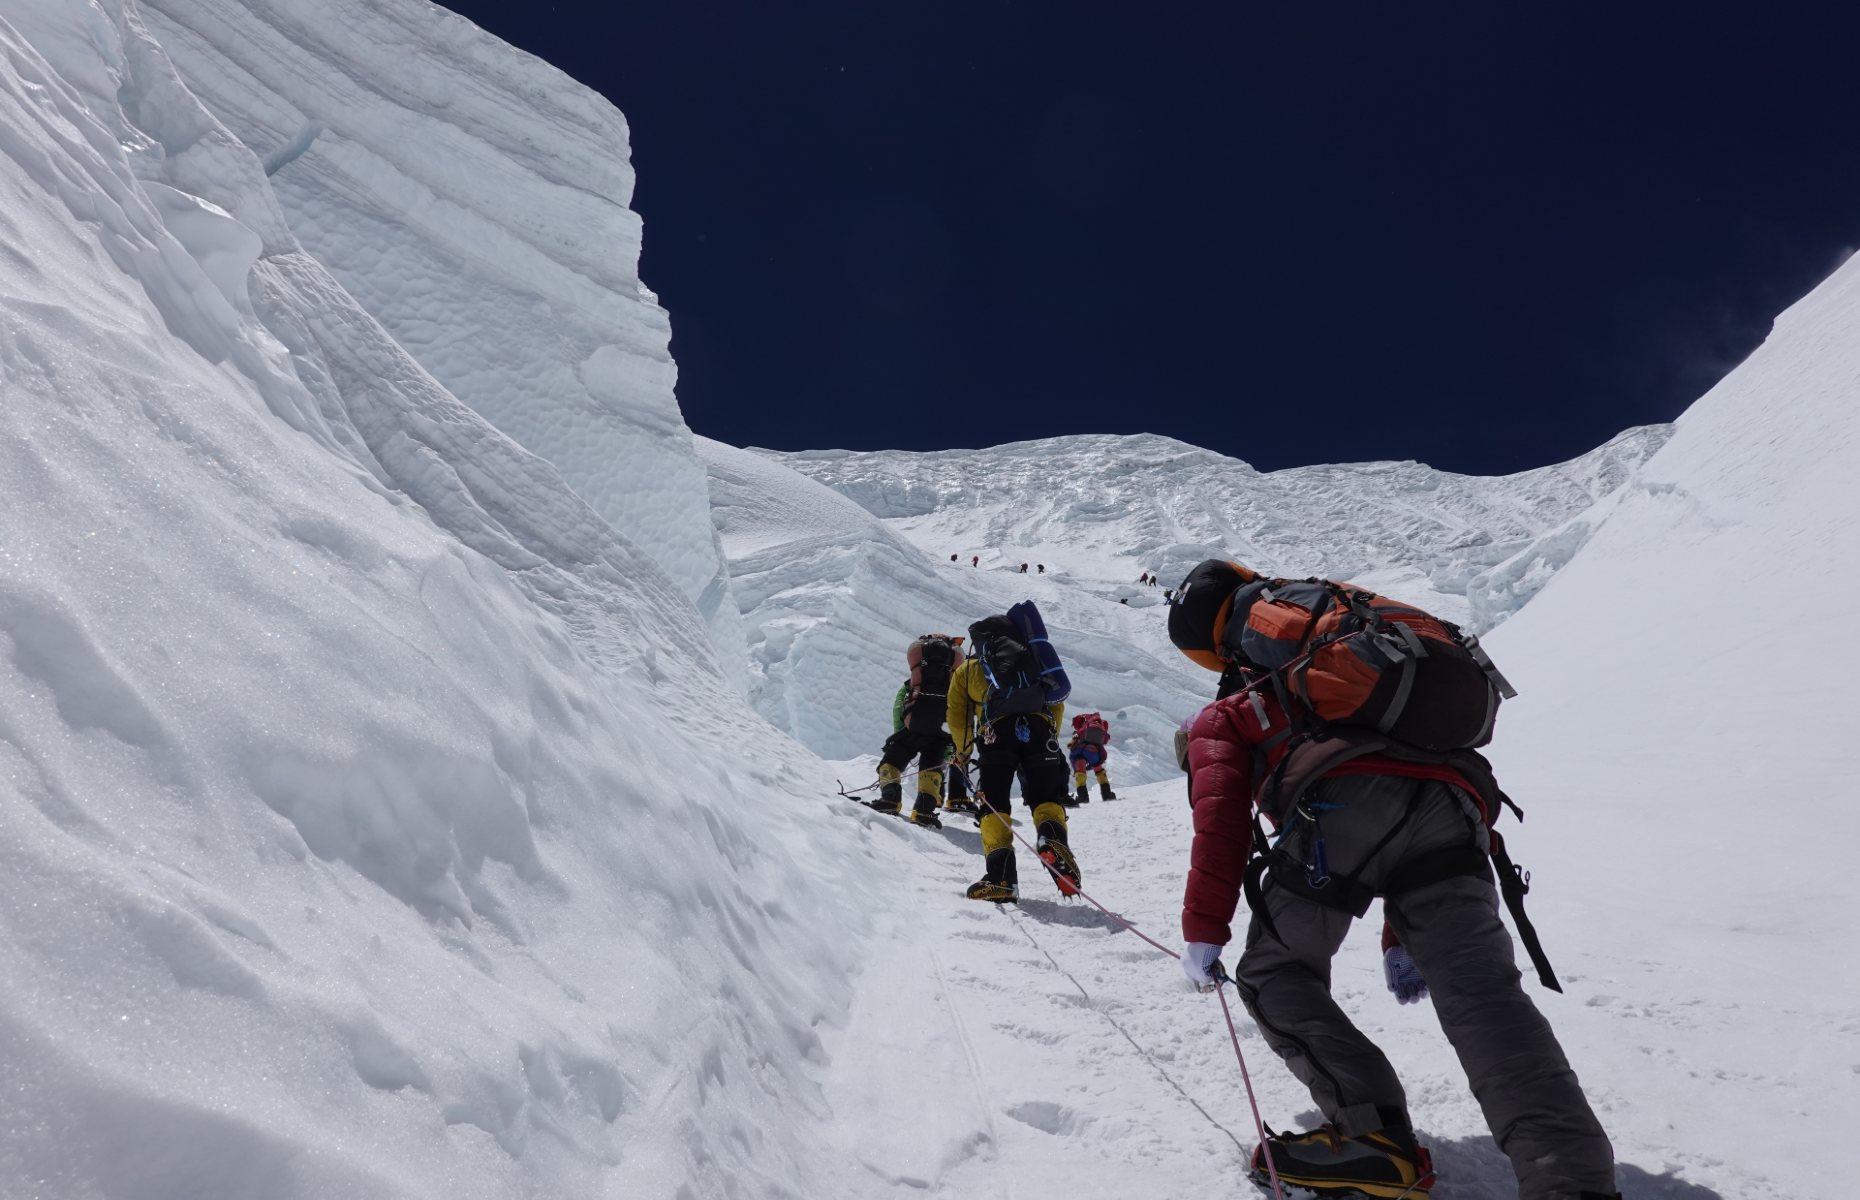 Hakan and his team scaling the mountain (Image: Hakan Bulgurlu)